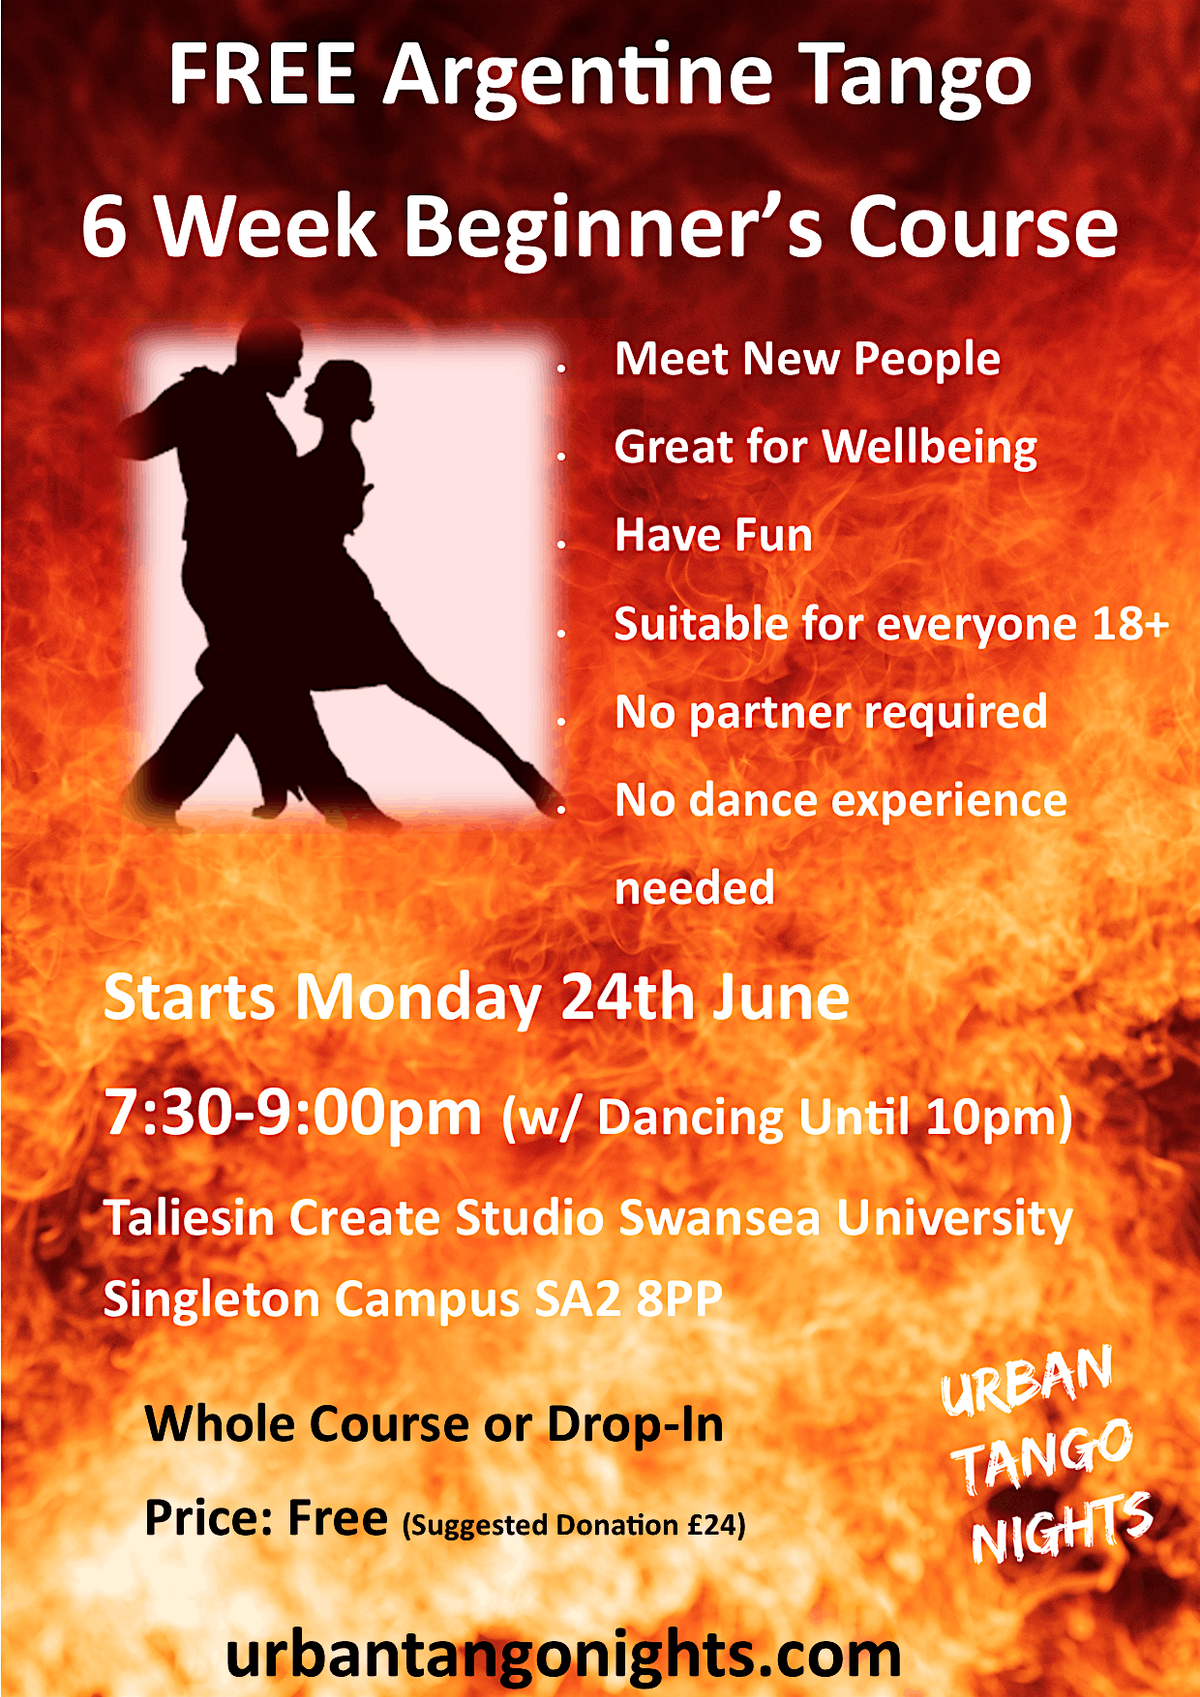 FREE 6 Week Argentine Tango Beginners Course (Summer)